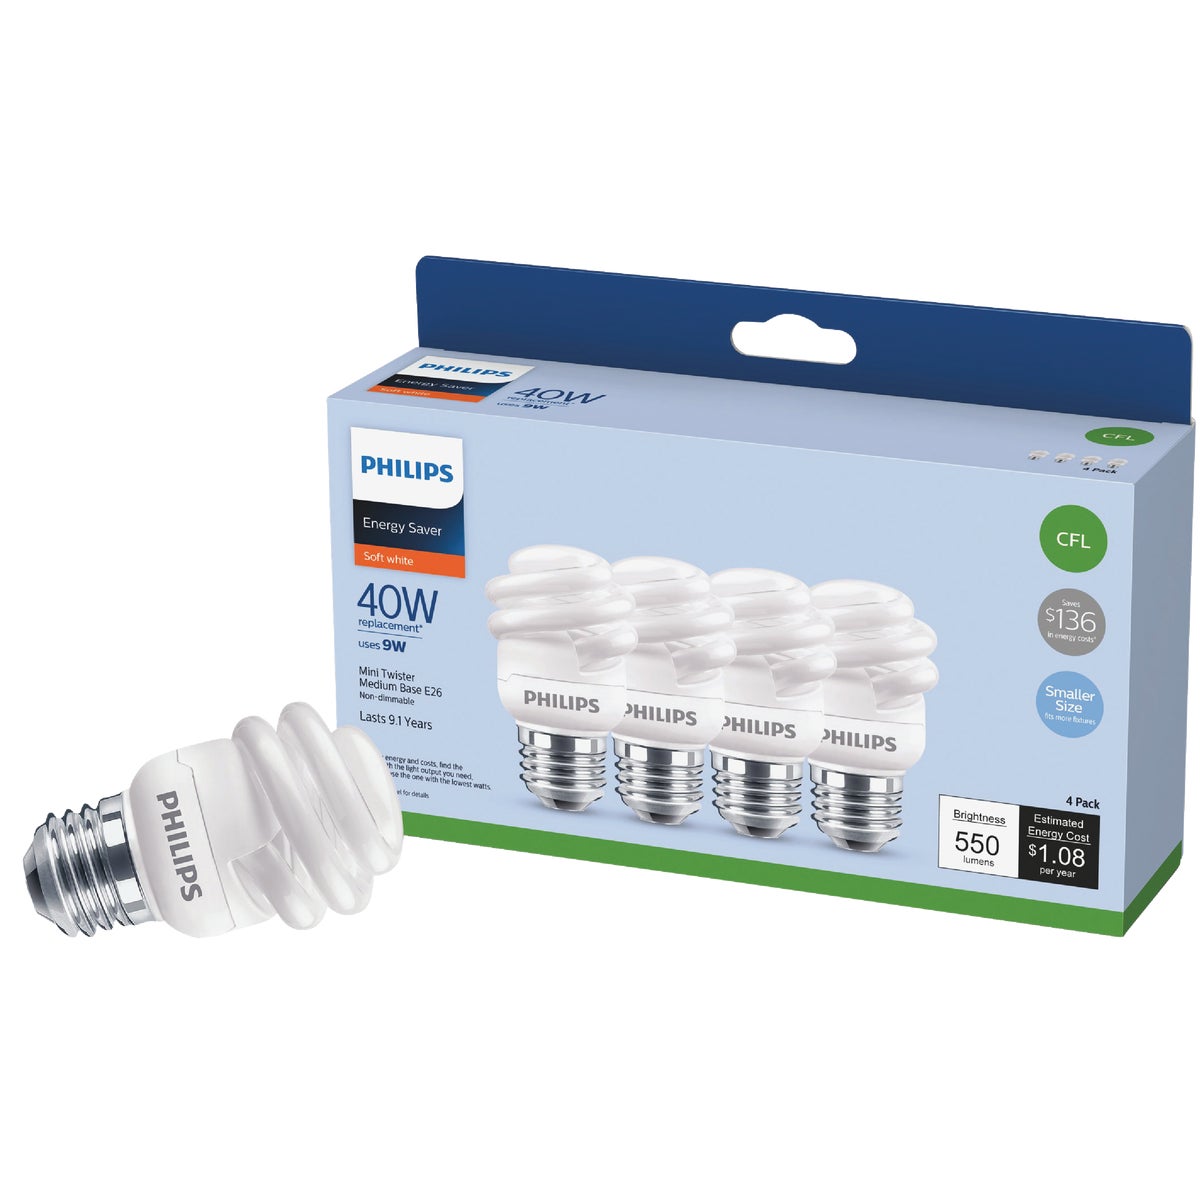 Philips Energy Saver 40W Equivalent Soft White Medium Base T2 Spiral CFL Light Bulb (4-Pack)